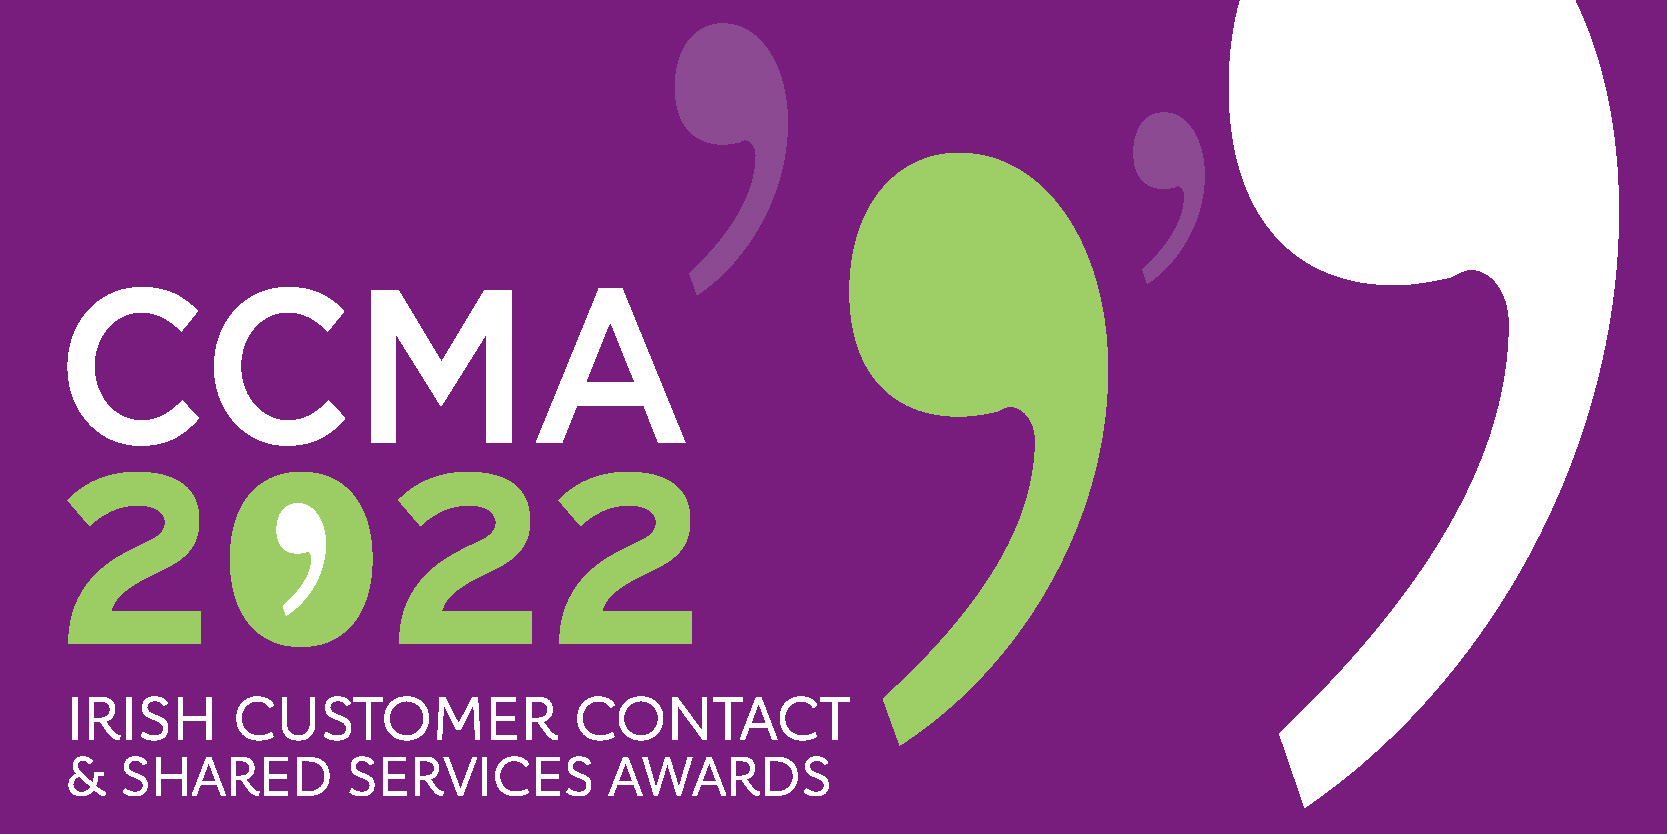 CCMA Irish Customer Contact & Shared Services Awards 2022